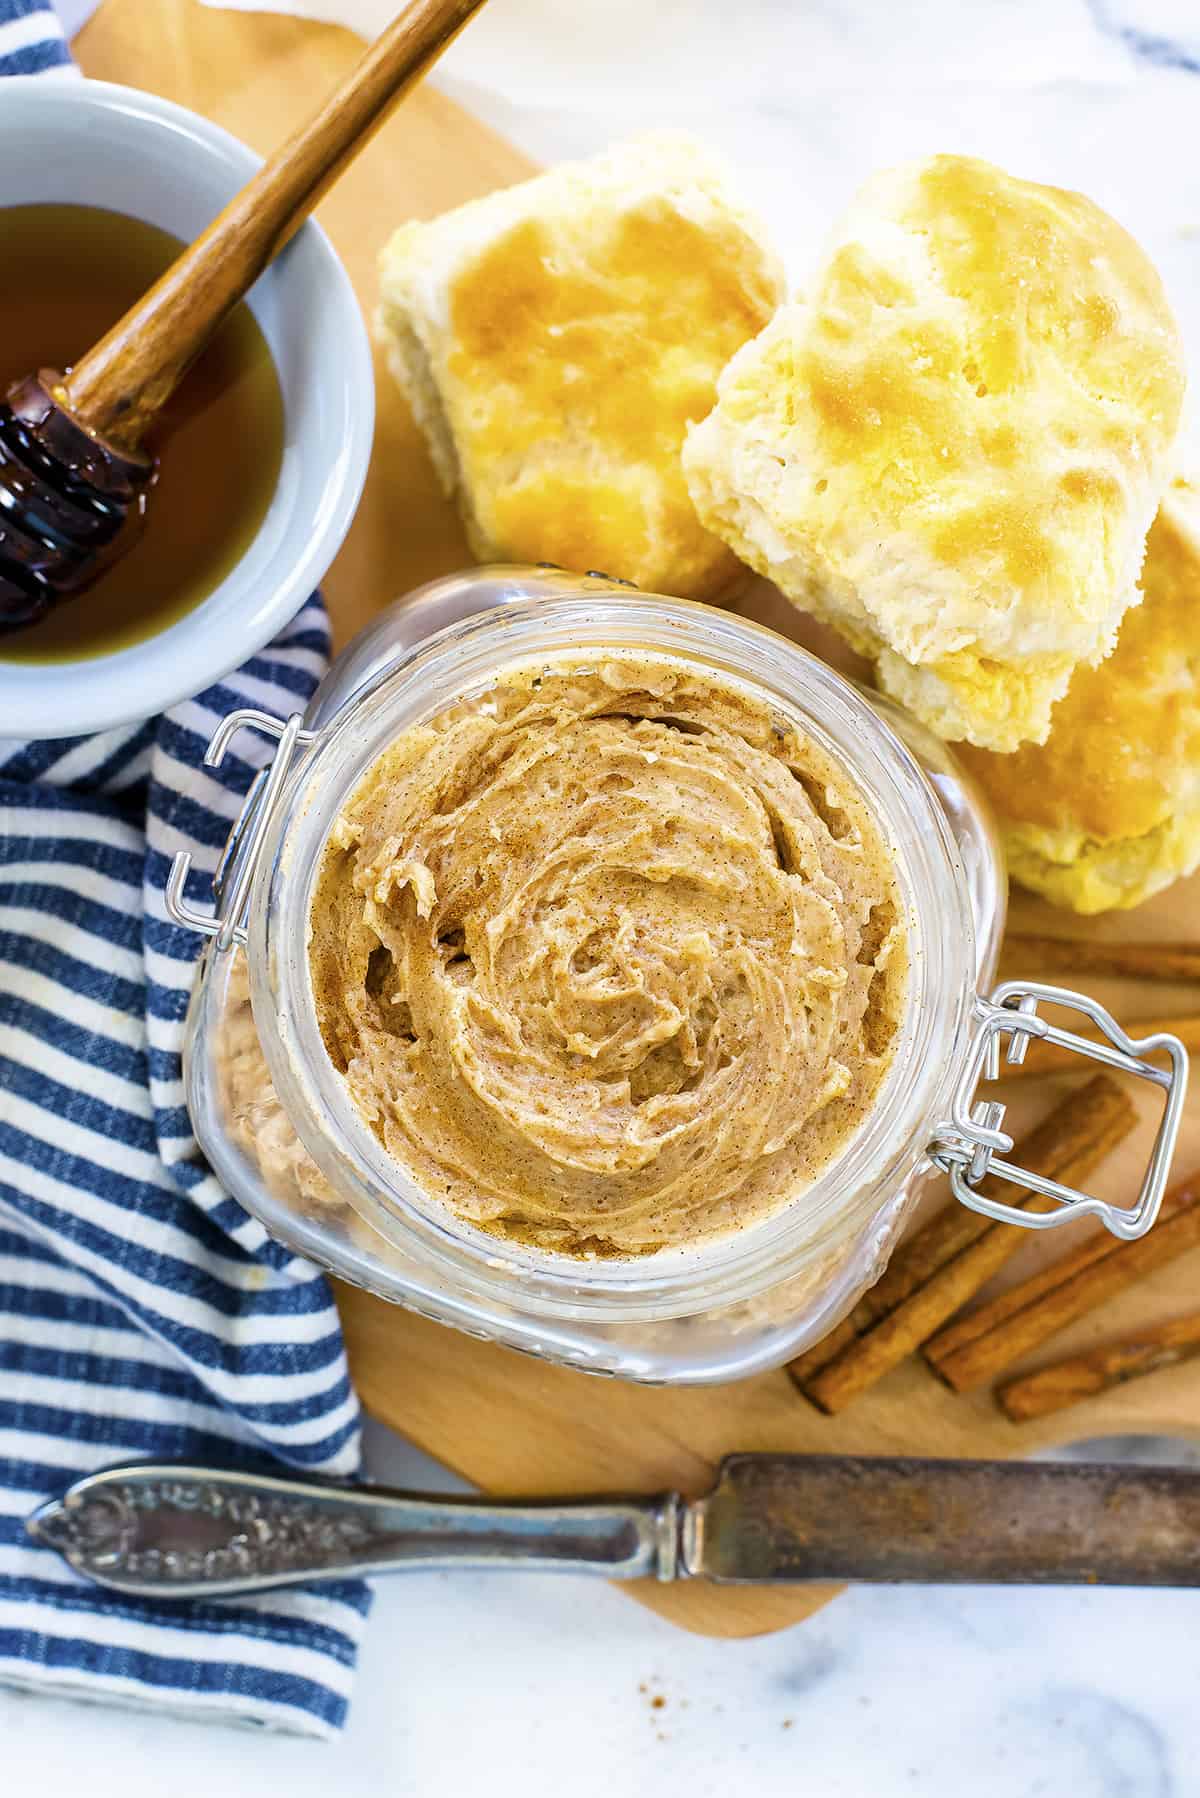 https://www.bunsinmyoven.com/wp-content/uploads/2019/01/recipe-for-cinnamon-honey-butter.jpg